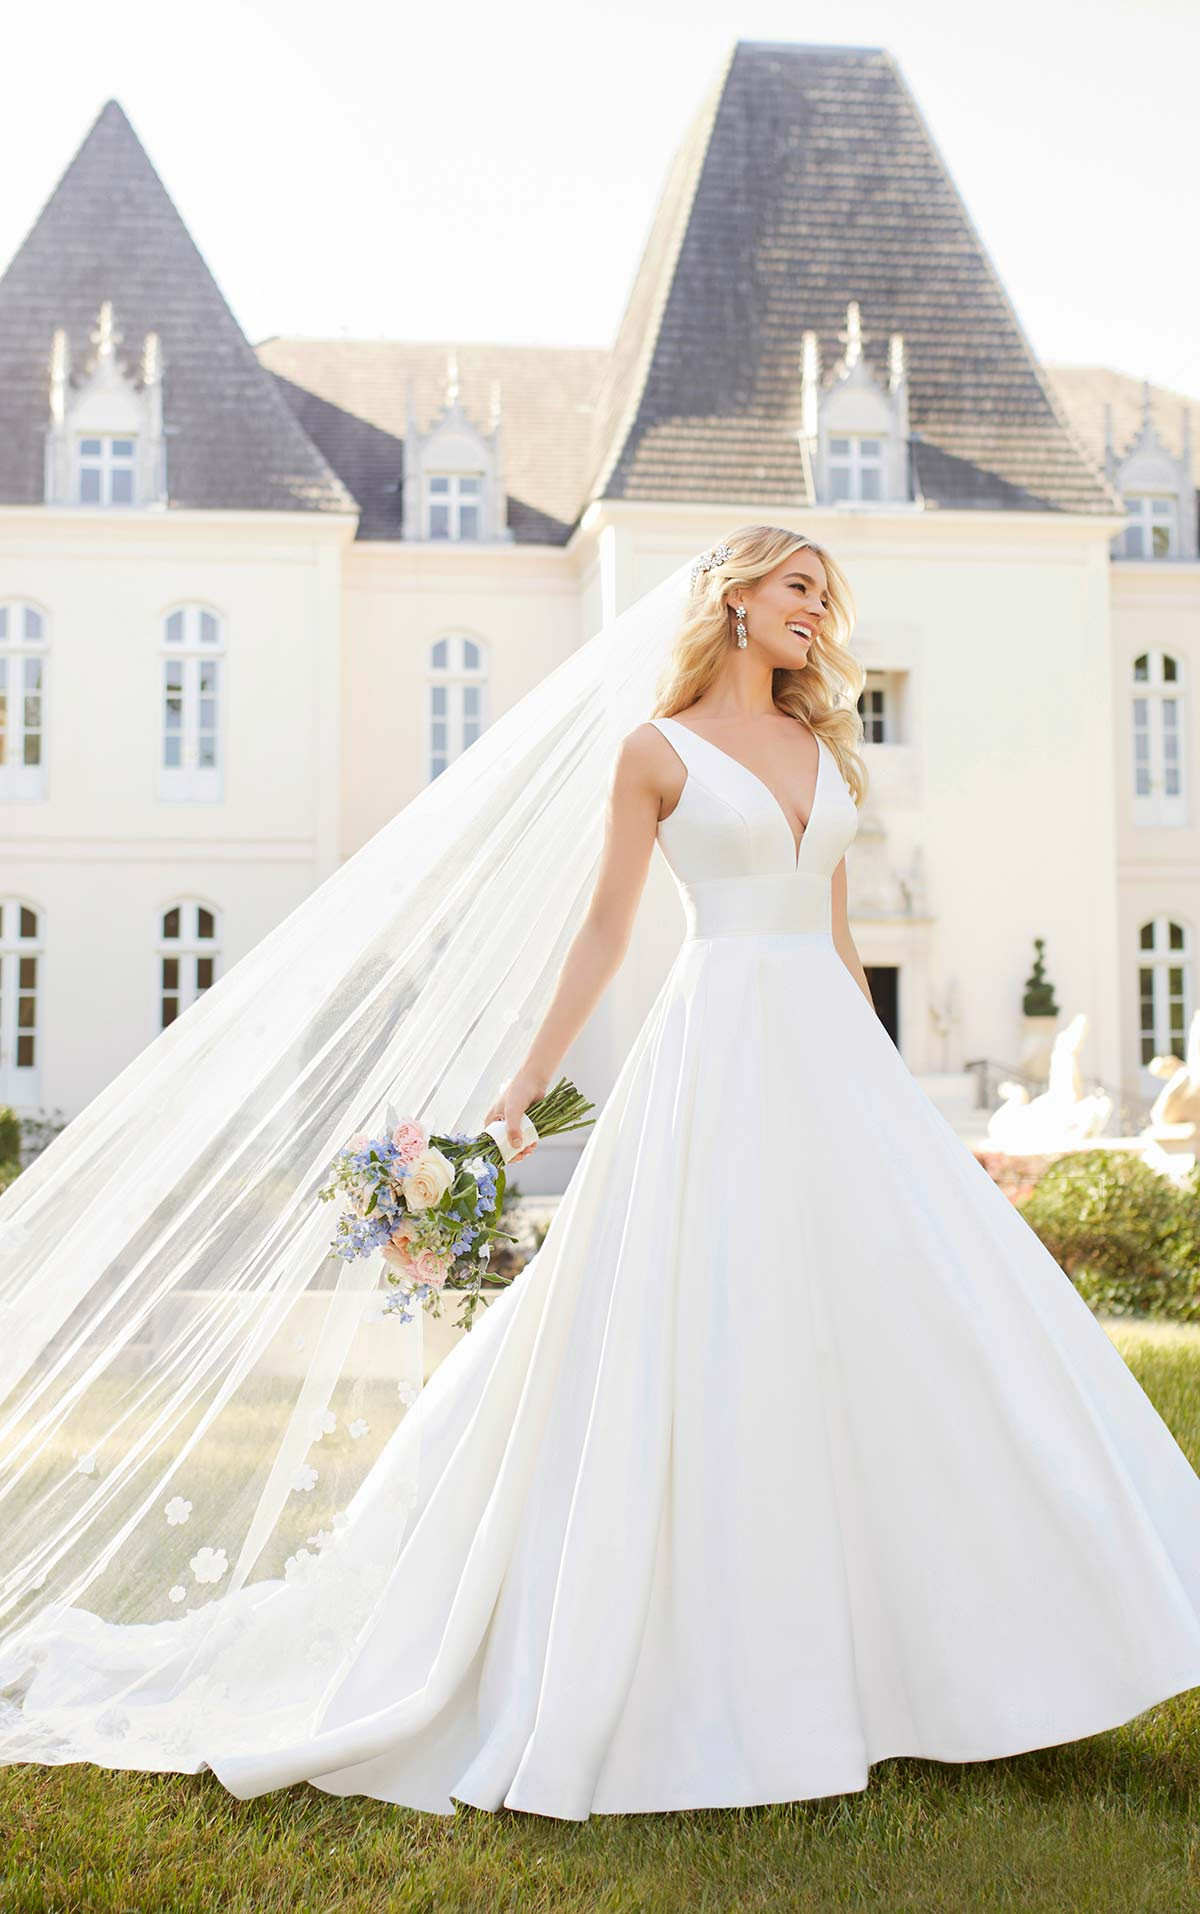 Designer Wedding Gowns
 Affordable Wedding Dress Designer Stella York Reveals New